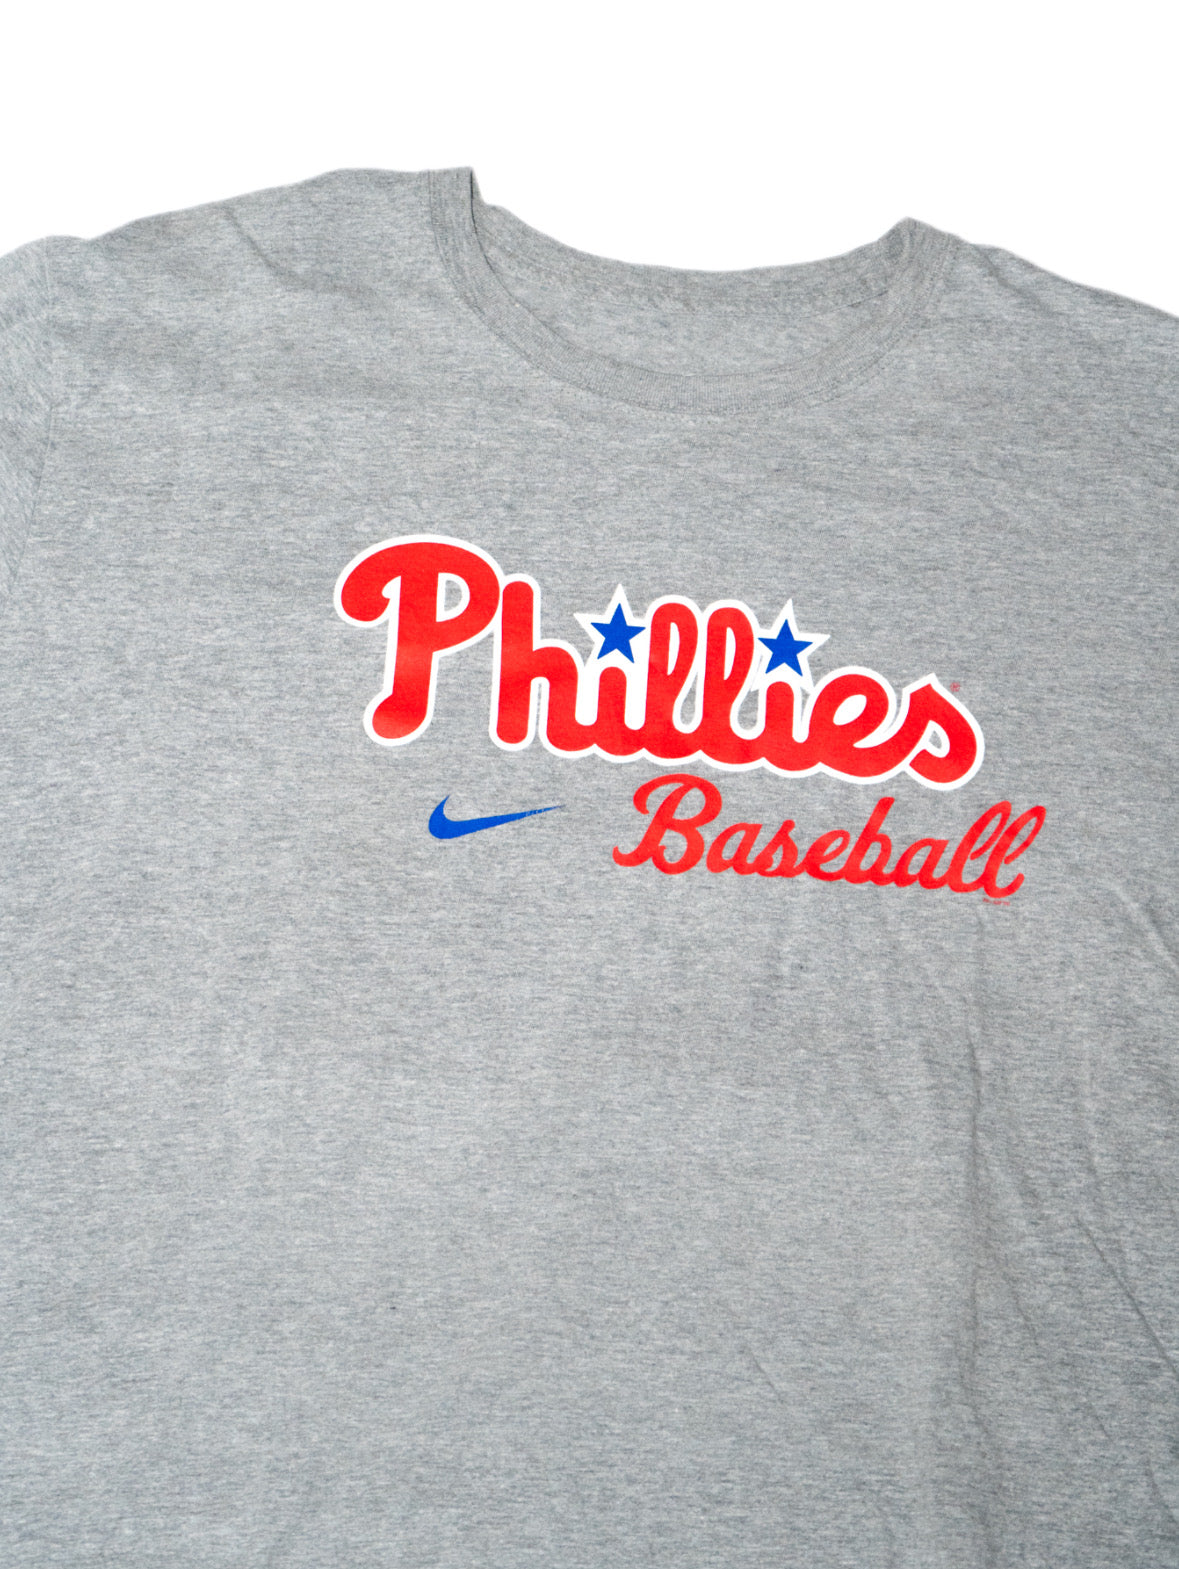 Nike Phillies Baseball T-Shirt